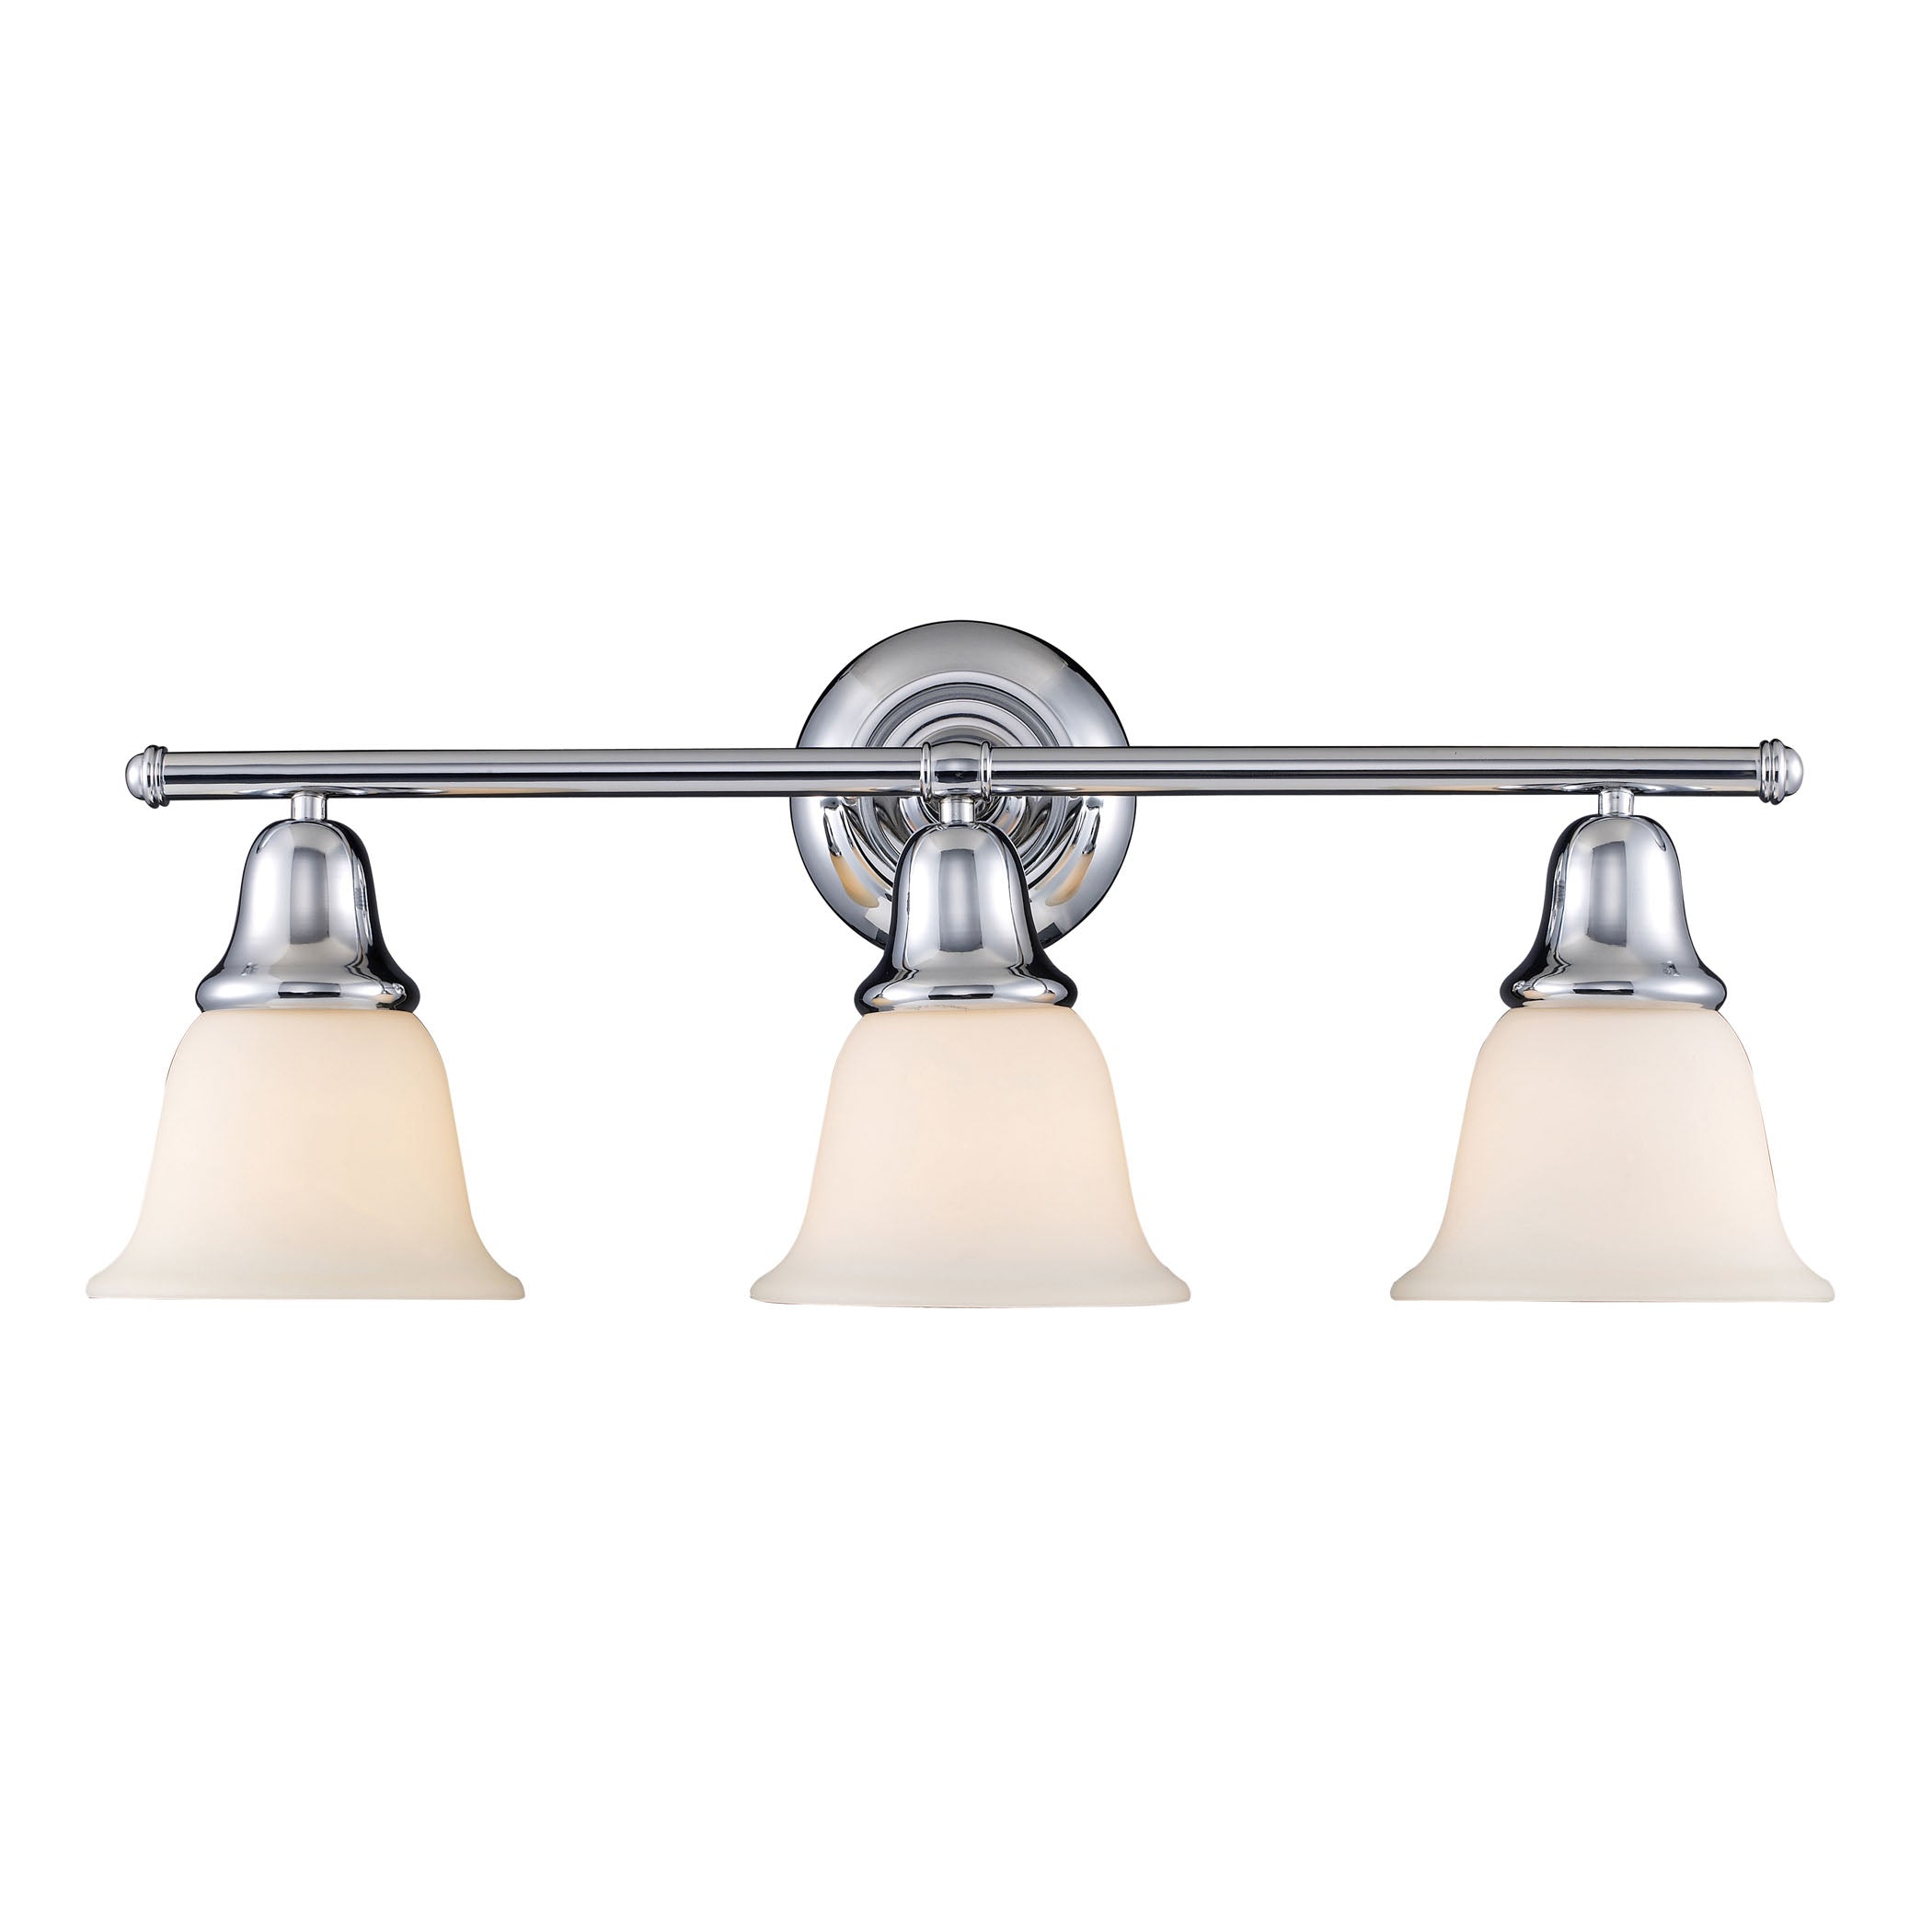 ELK Lighting 67012-3 Berwick 3-Light Vanity Lamp in Polished Chrome with White Glass